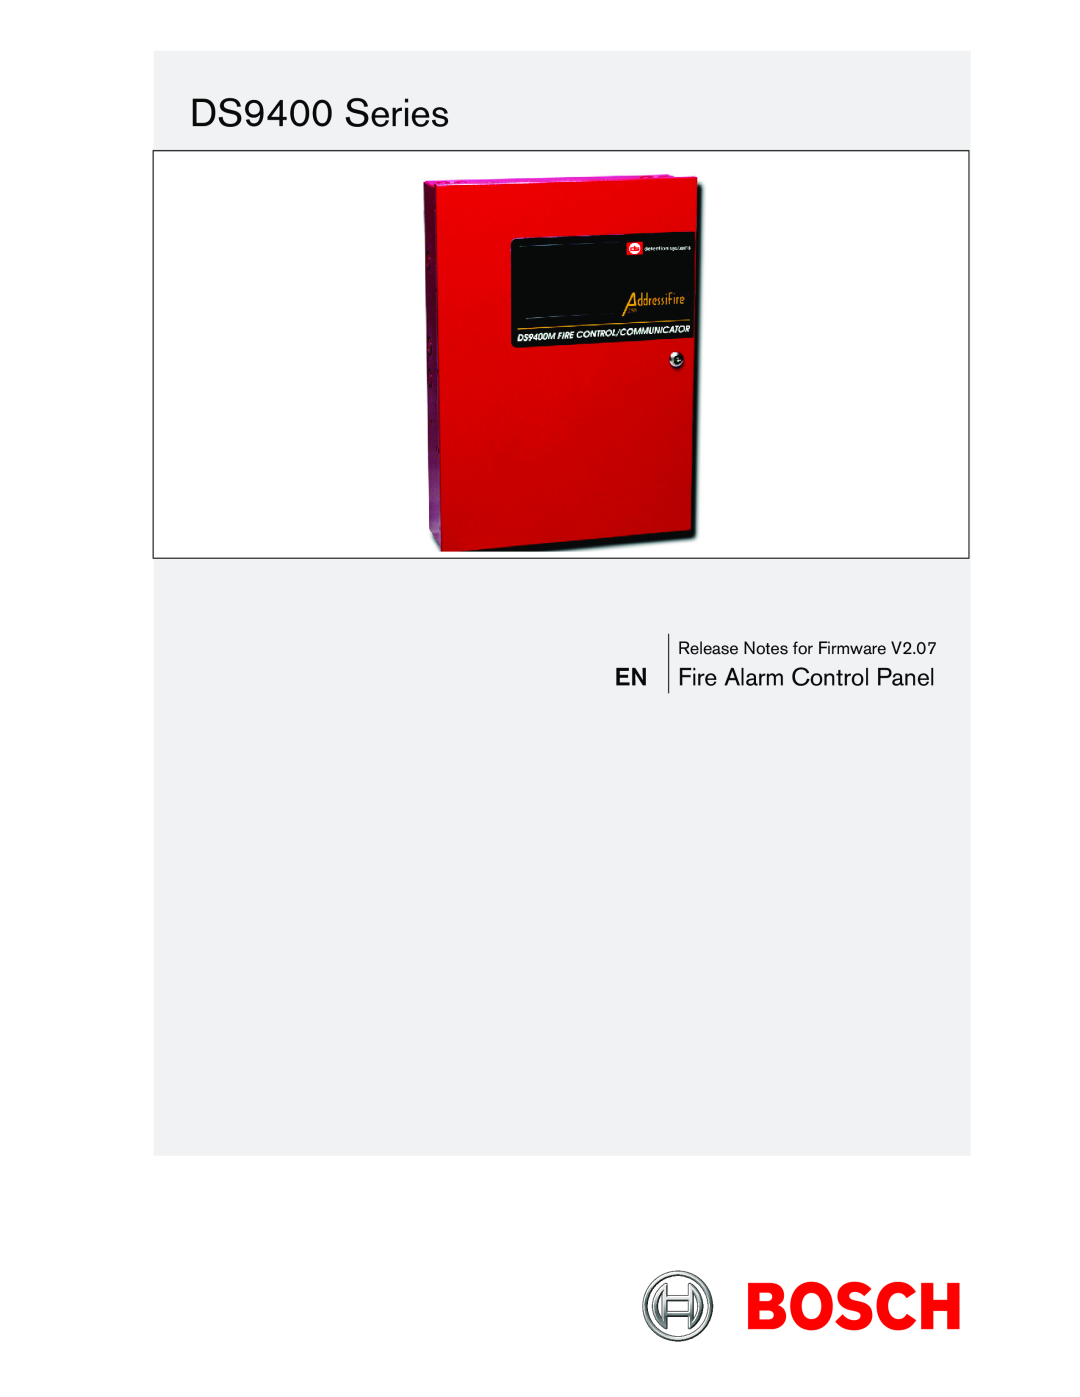 Bosch Appliances manual DS9400 Series, Fire Alarm Control Panel 